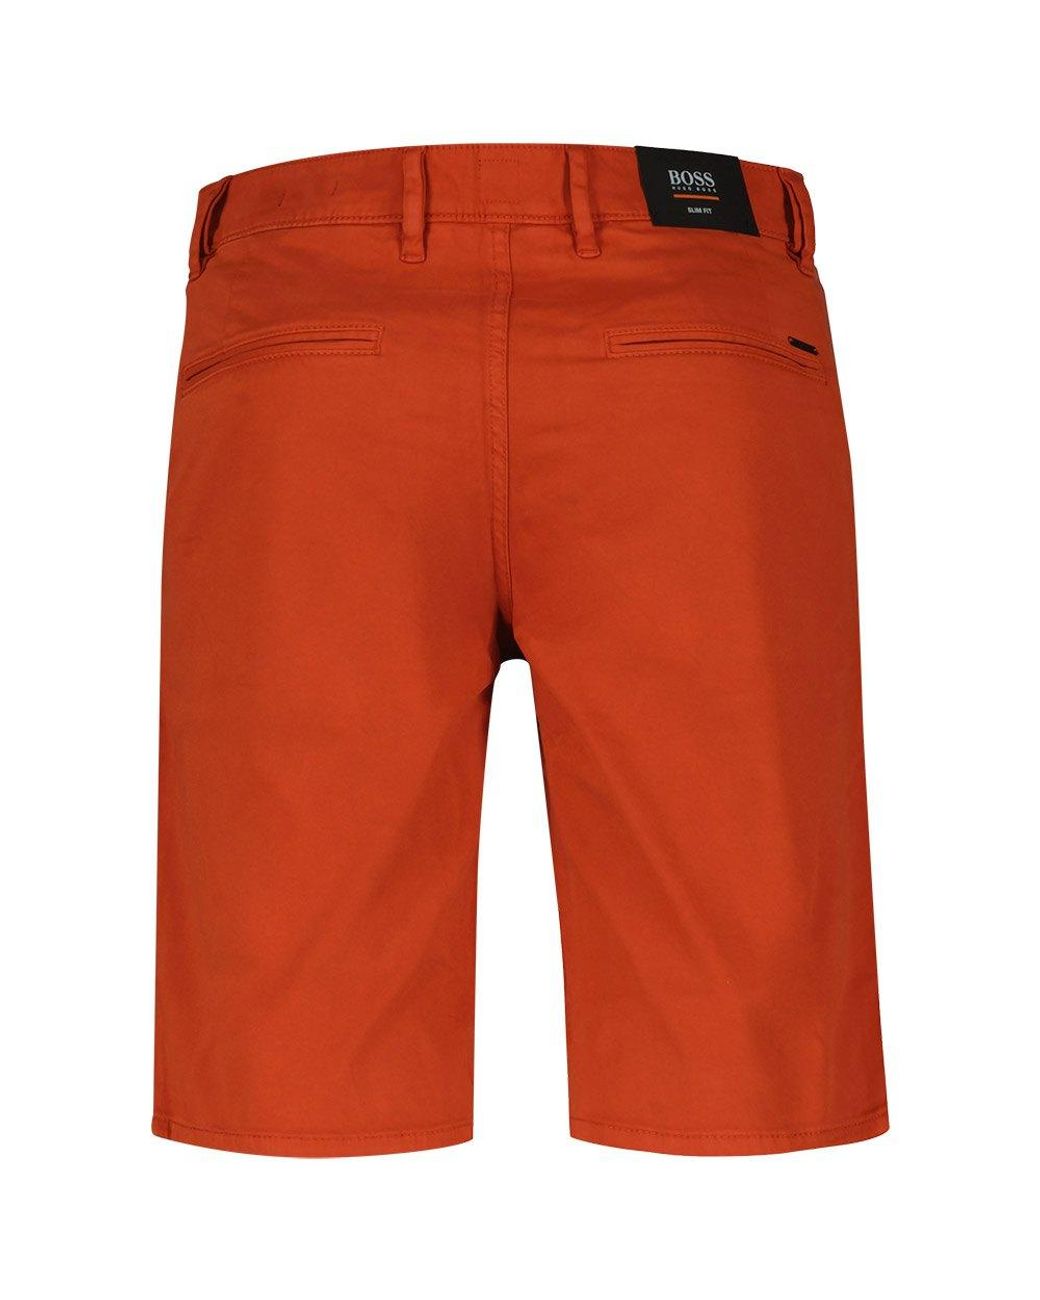 BOSS by HUGO BOSS S Slim Chino Shorts in Orange for Men | Lyst